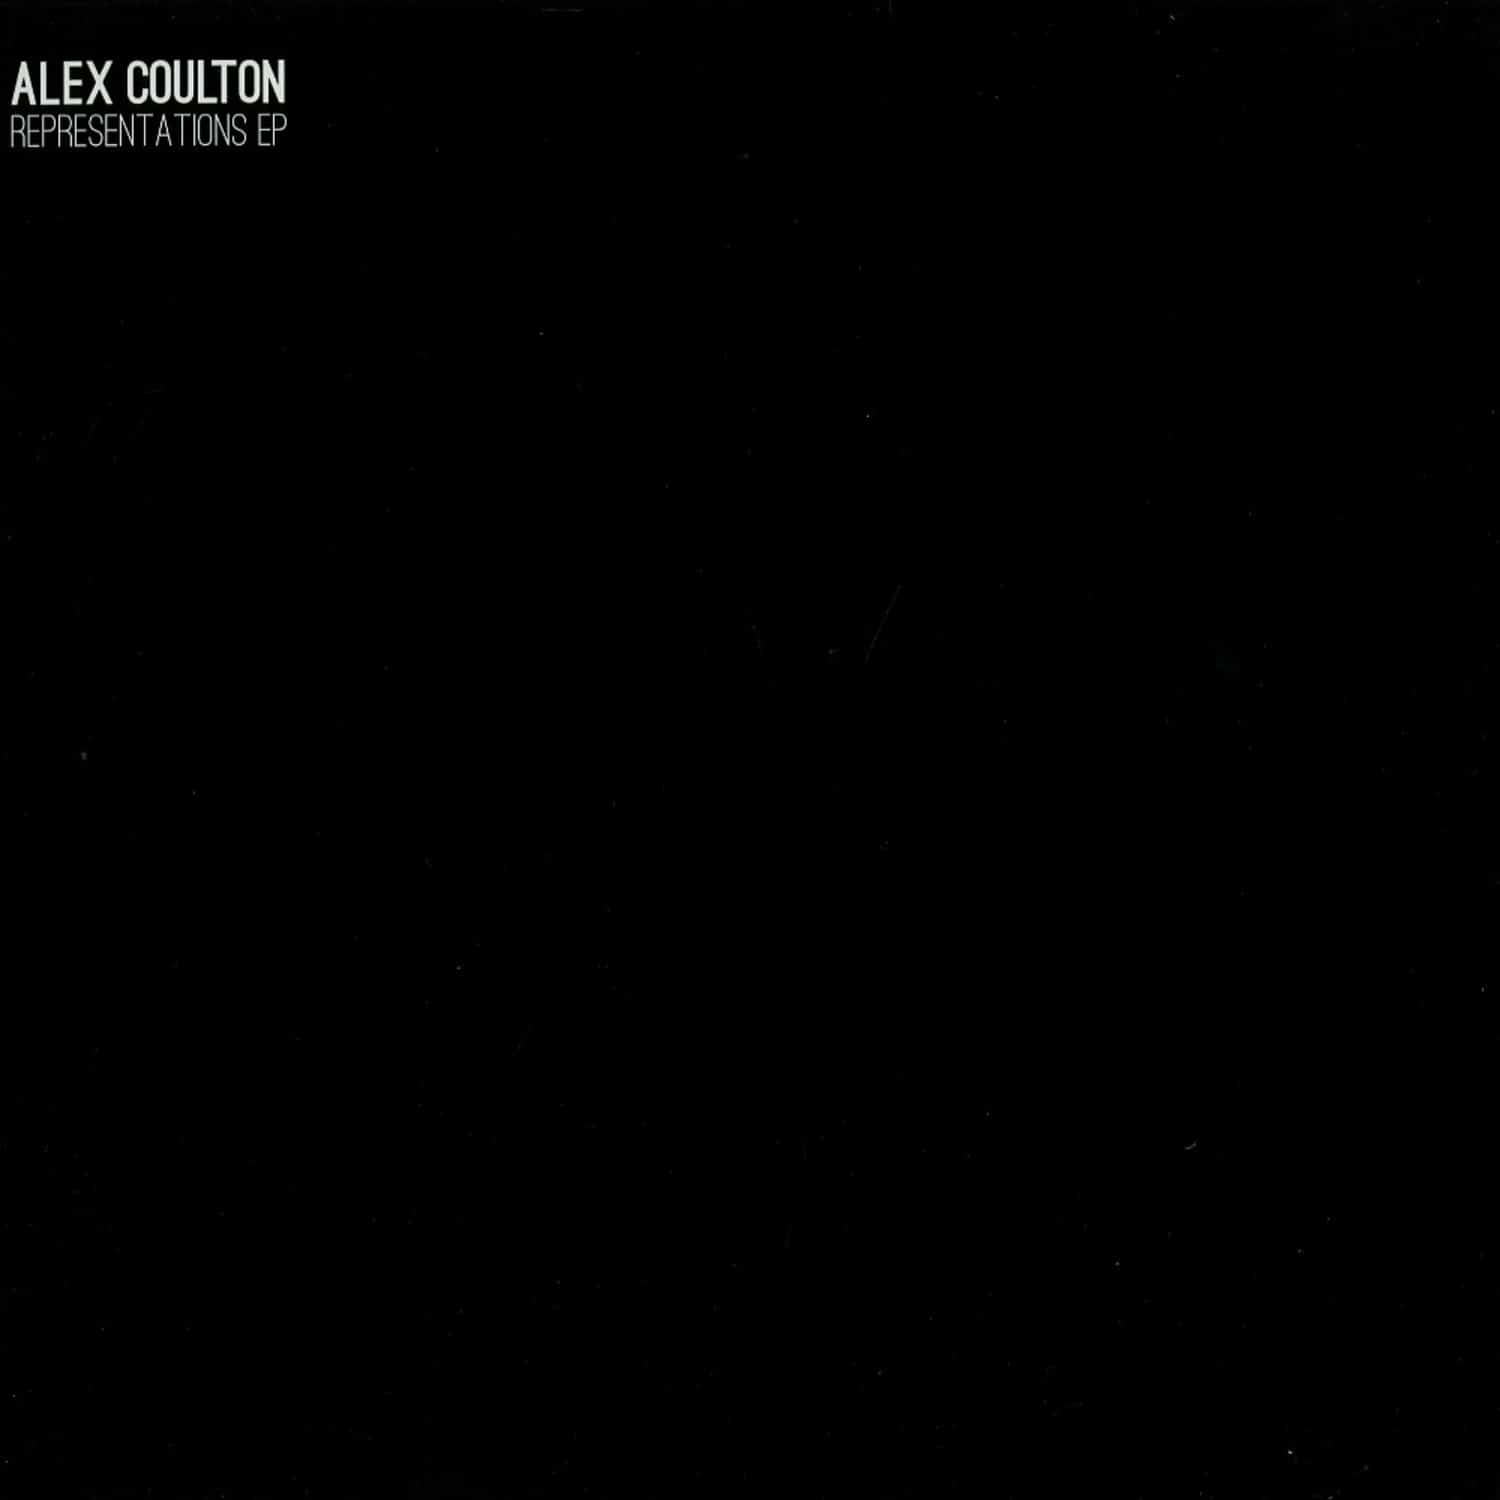 Alex Coulton - REPRESENTATIONS EP